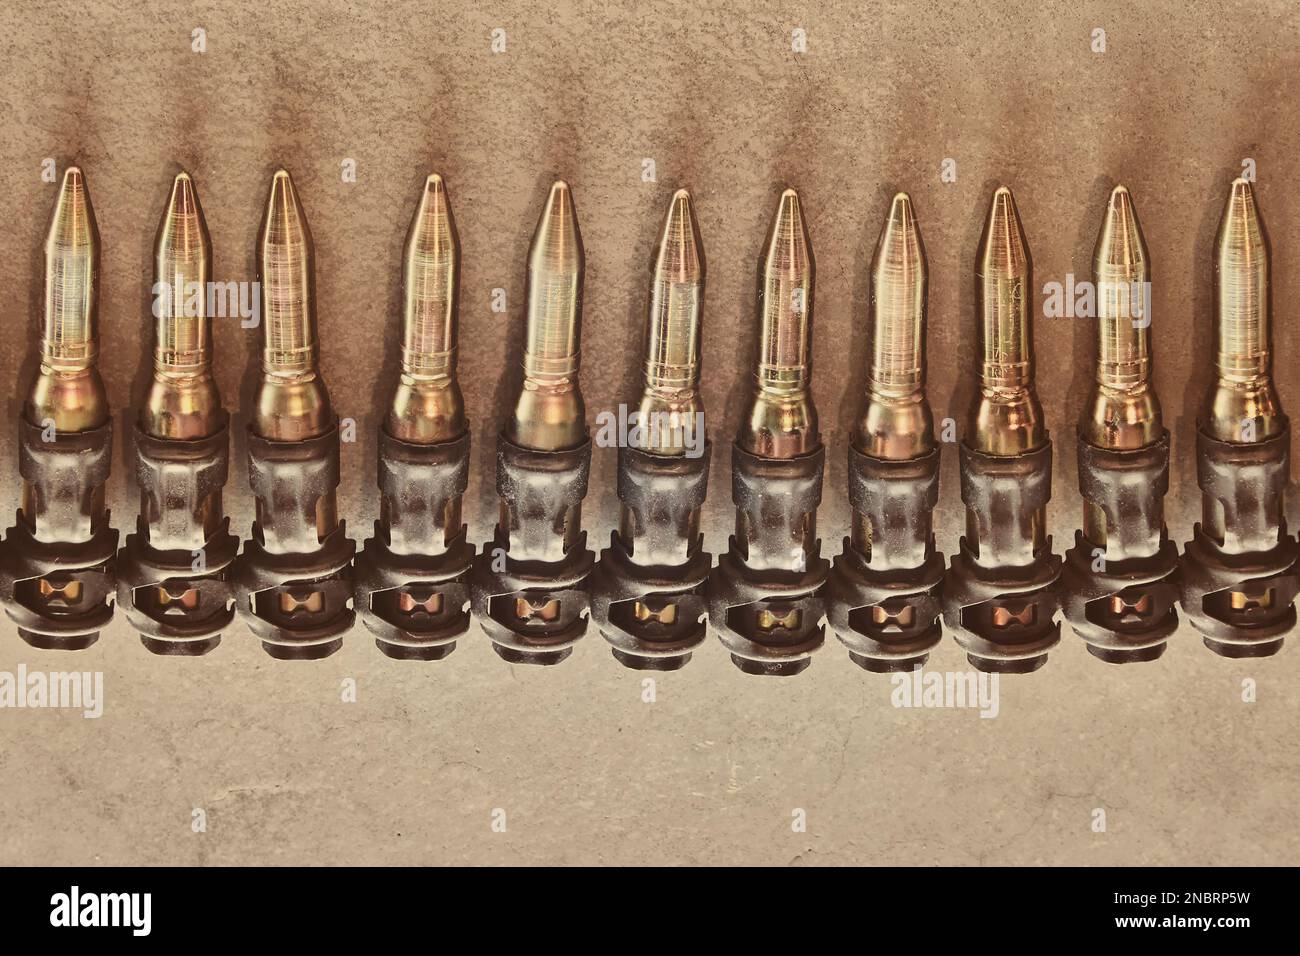 Retro styled image of a military machine gun ammunition belt Stock Photo